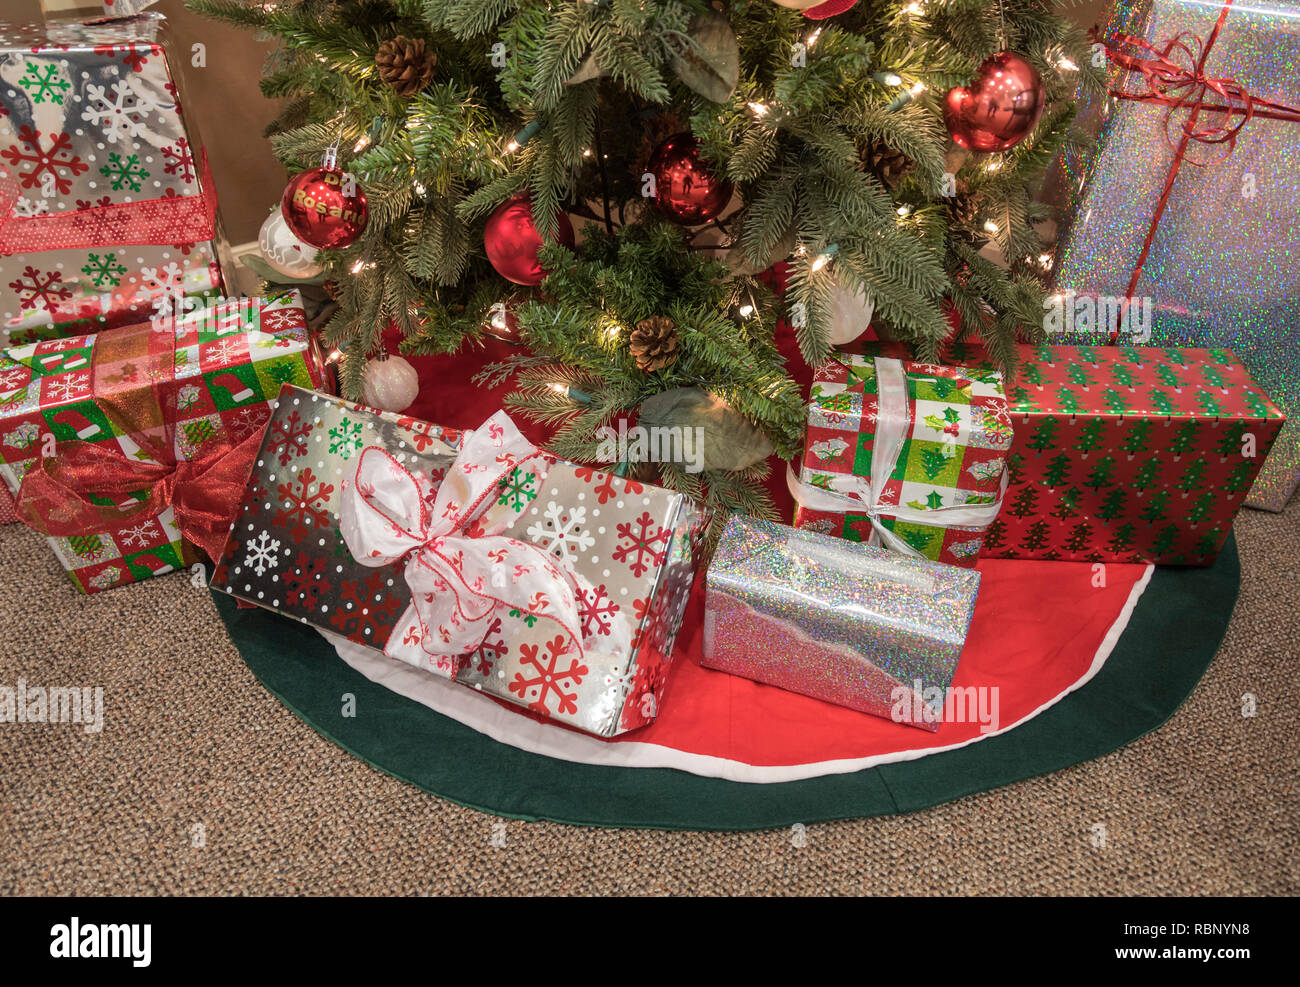 Christmas presents under a Christmas tree. Stock Photo